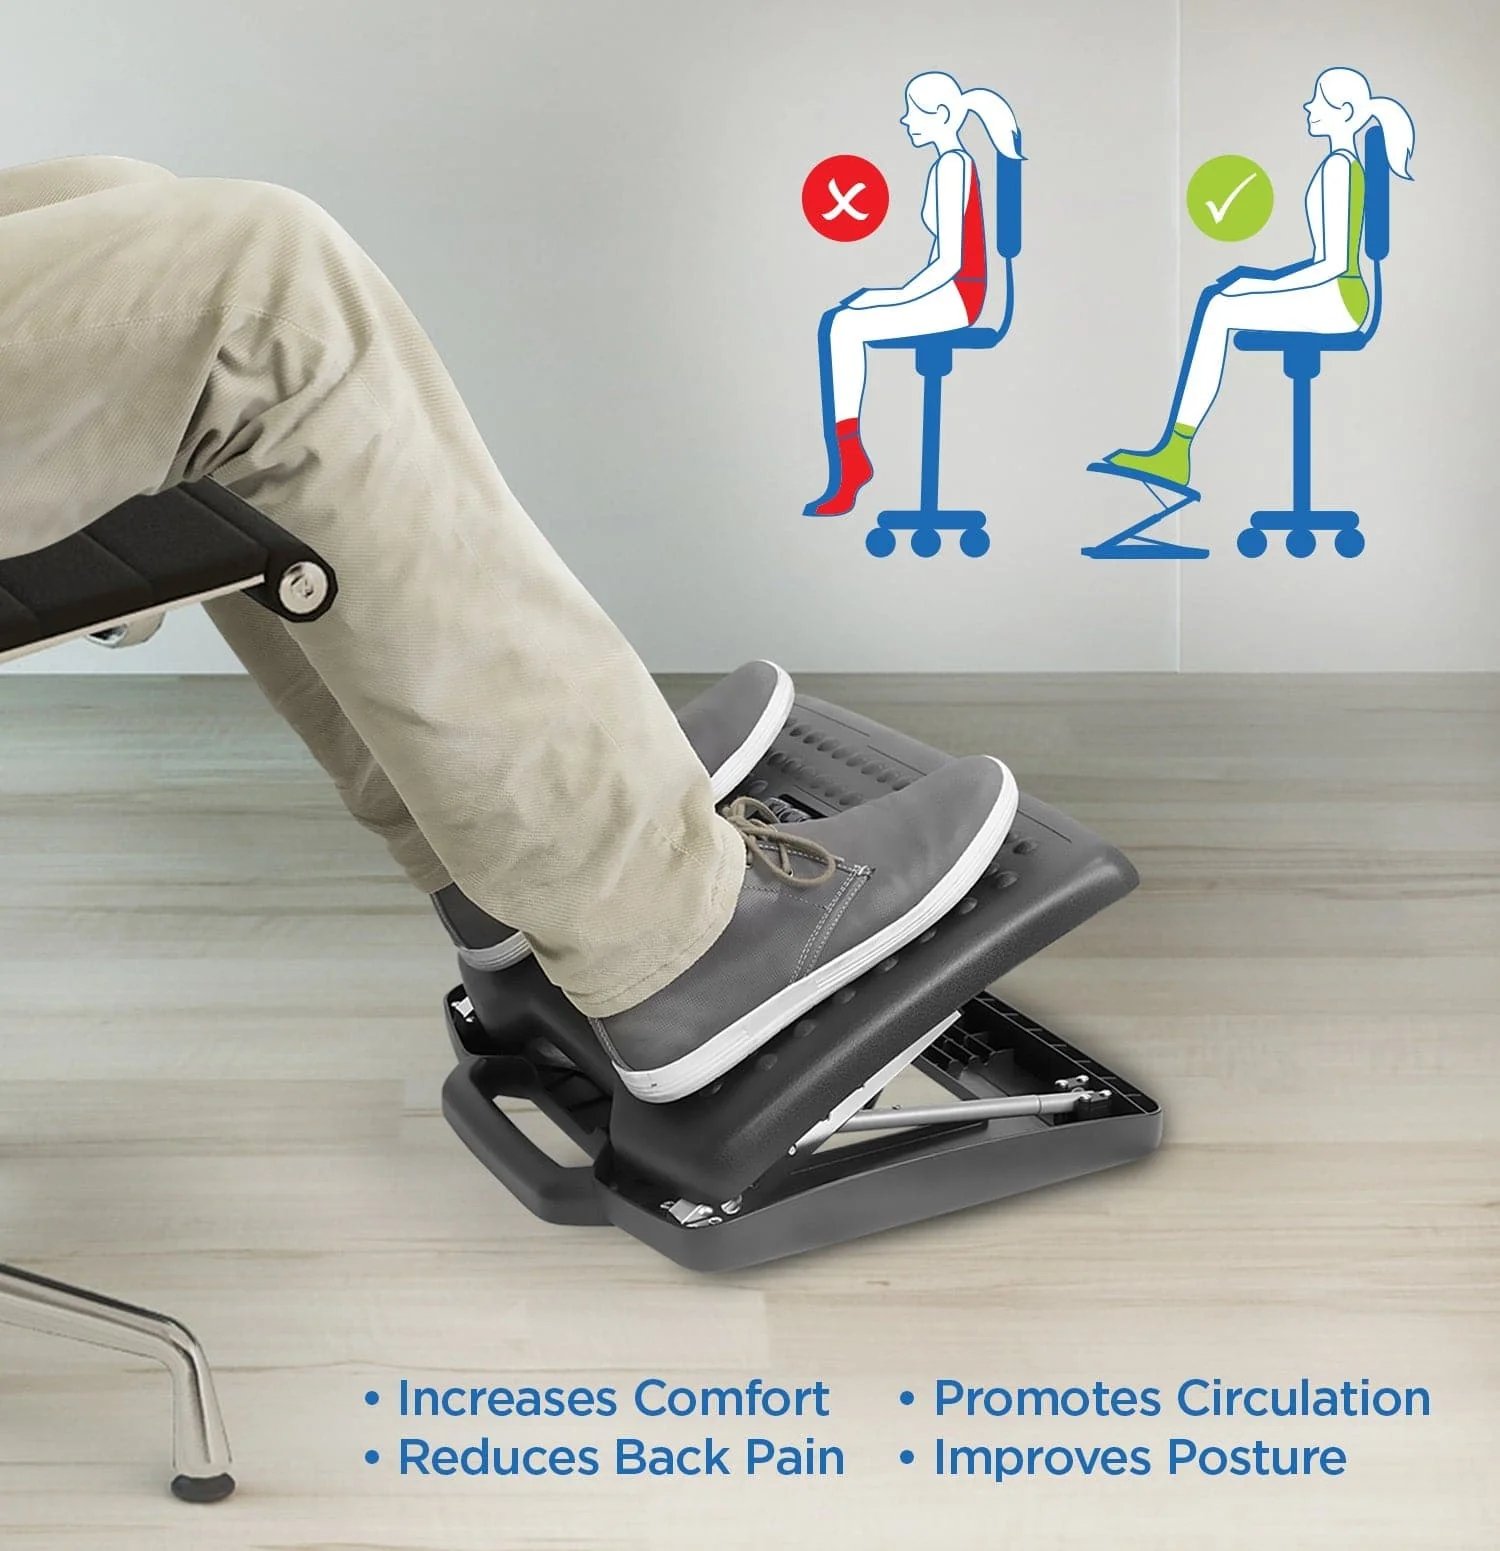 Mount-IT! MI-7808 Under Desk Footrest, Adjustable Height/Angle & Massaging Rollers